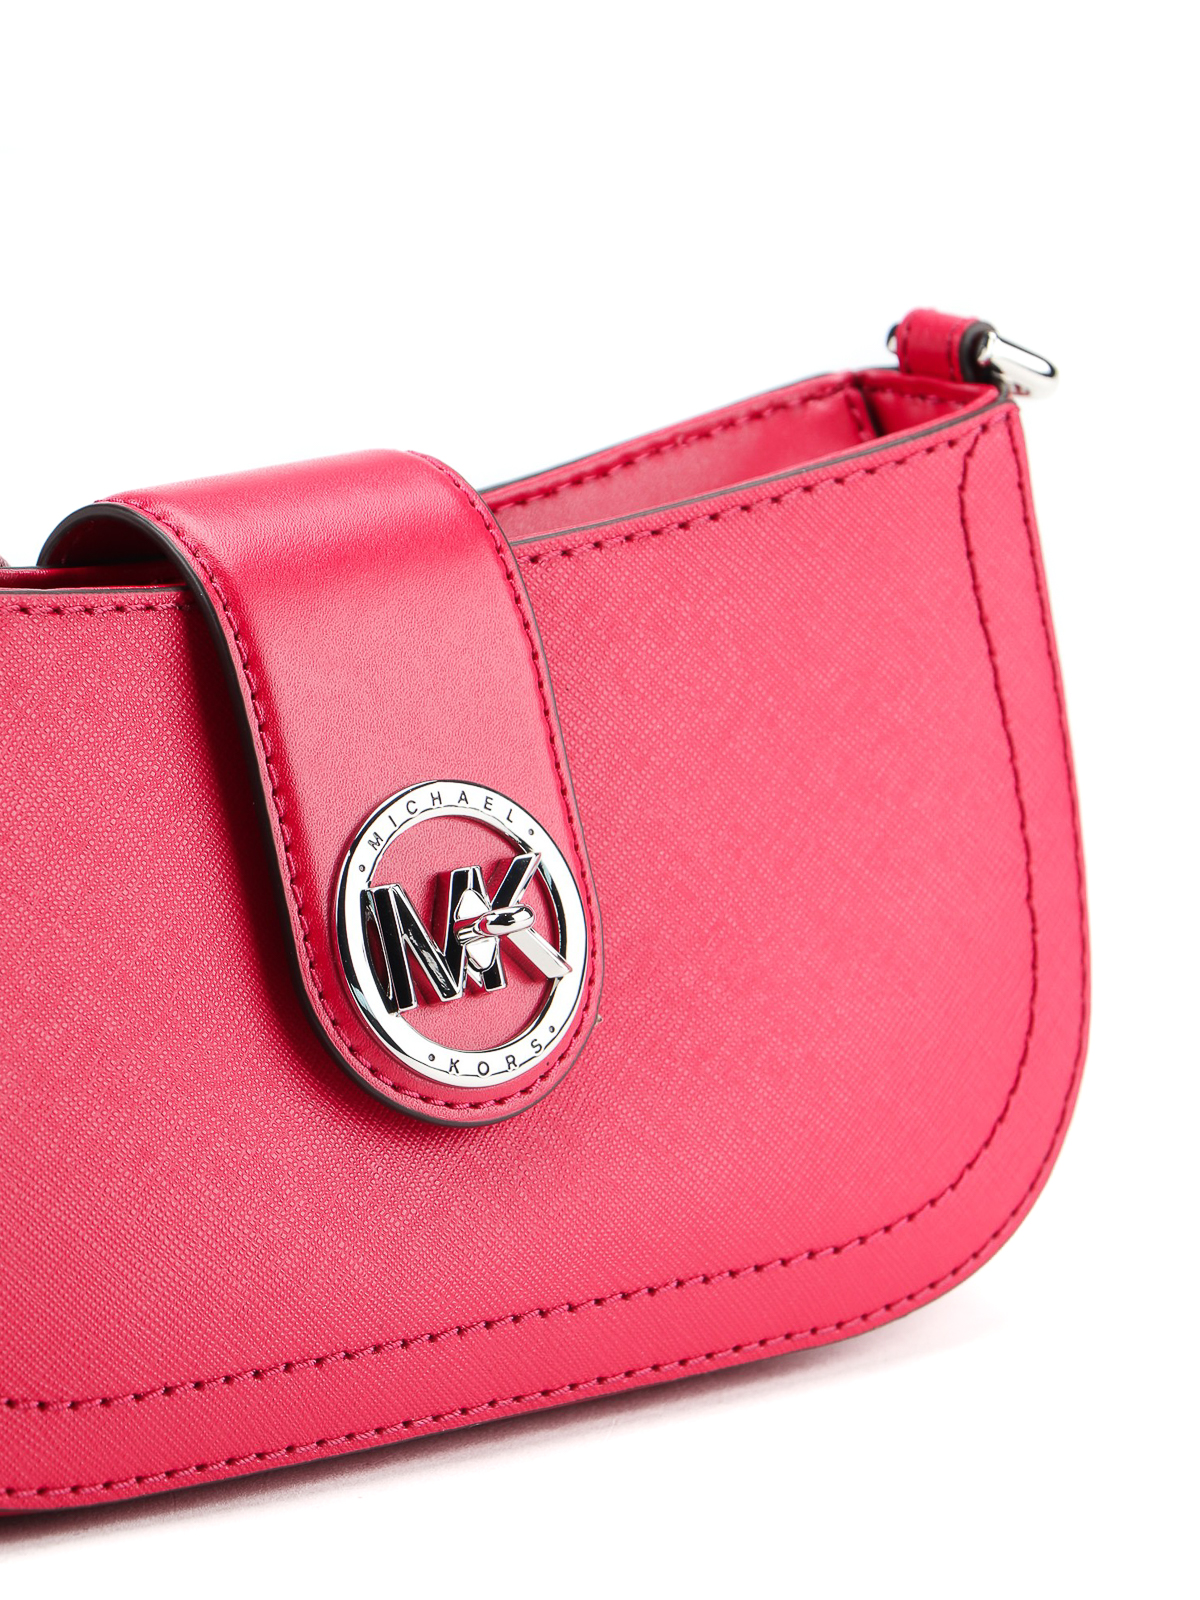 MICHAEL Michael Kors Carmen Leather Shoulder Bag in Pink